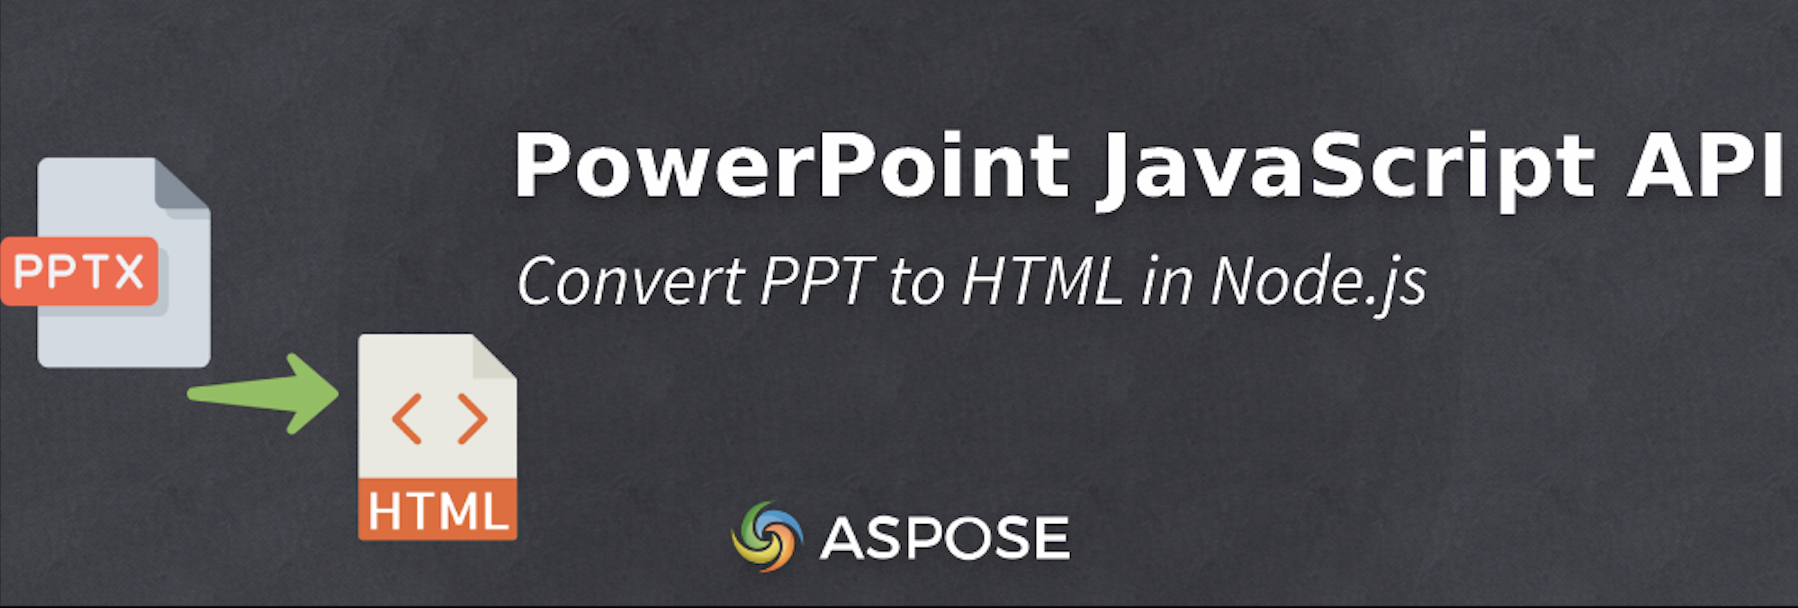 Konvertieren Sie PPT in HTML in Node.js – PowerPoint-JavaScript-API